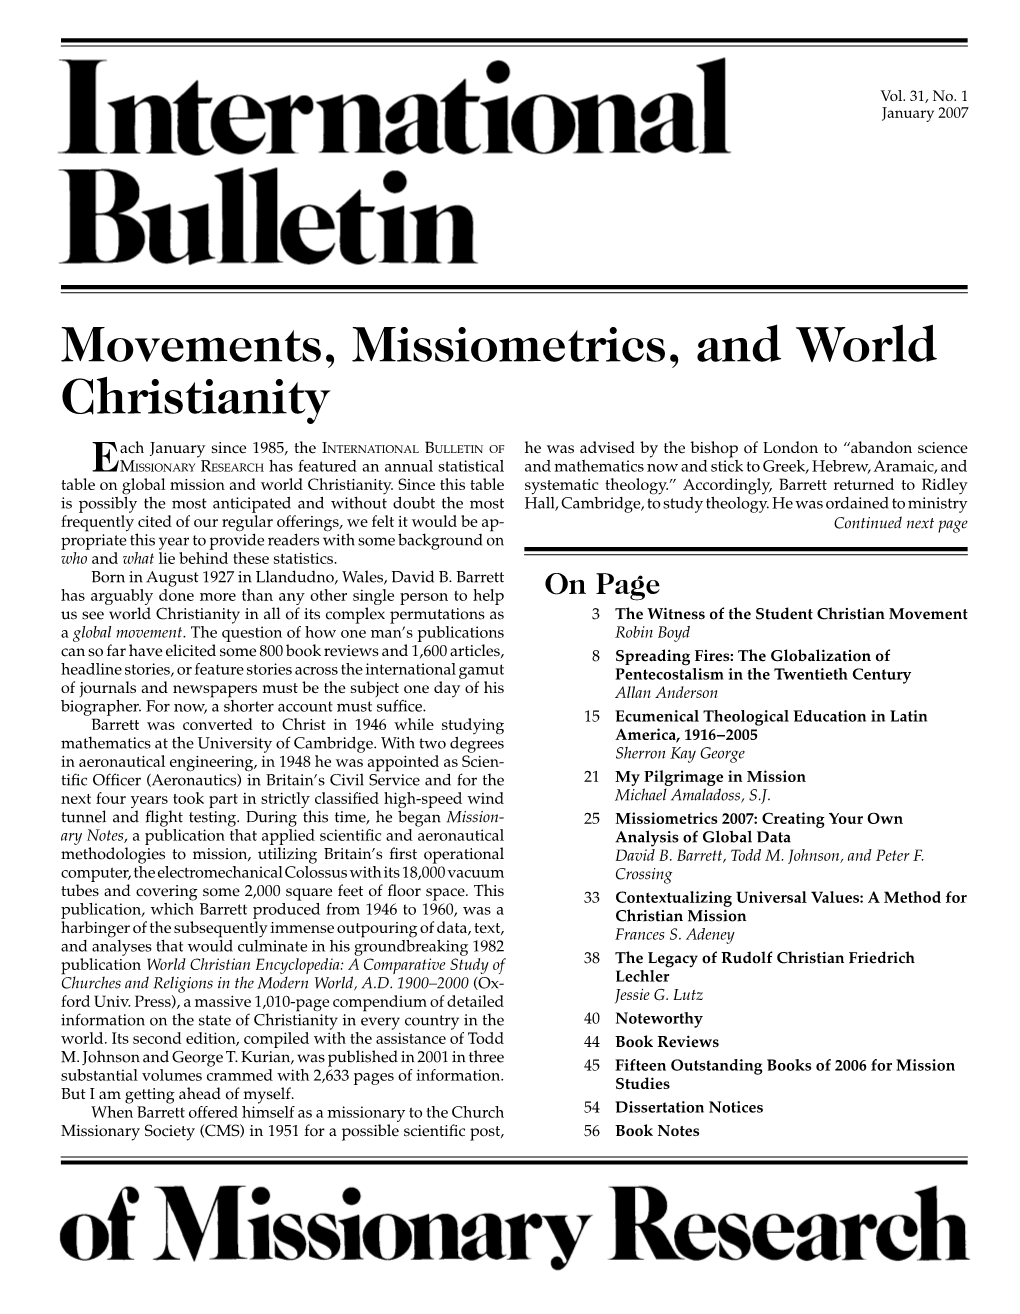 Movements, Missiometrics, and World Christianity